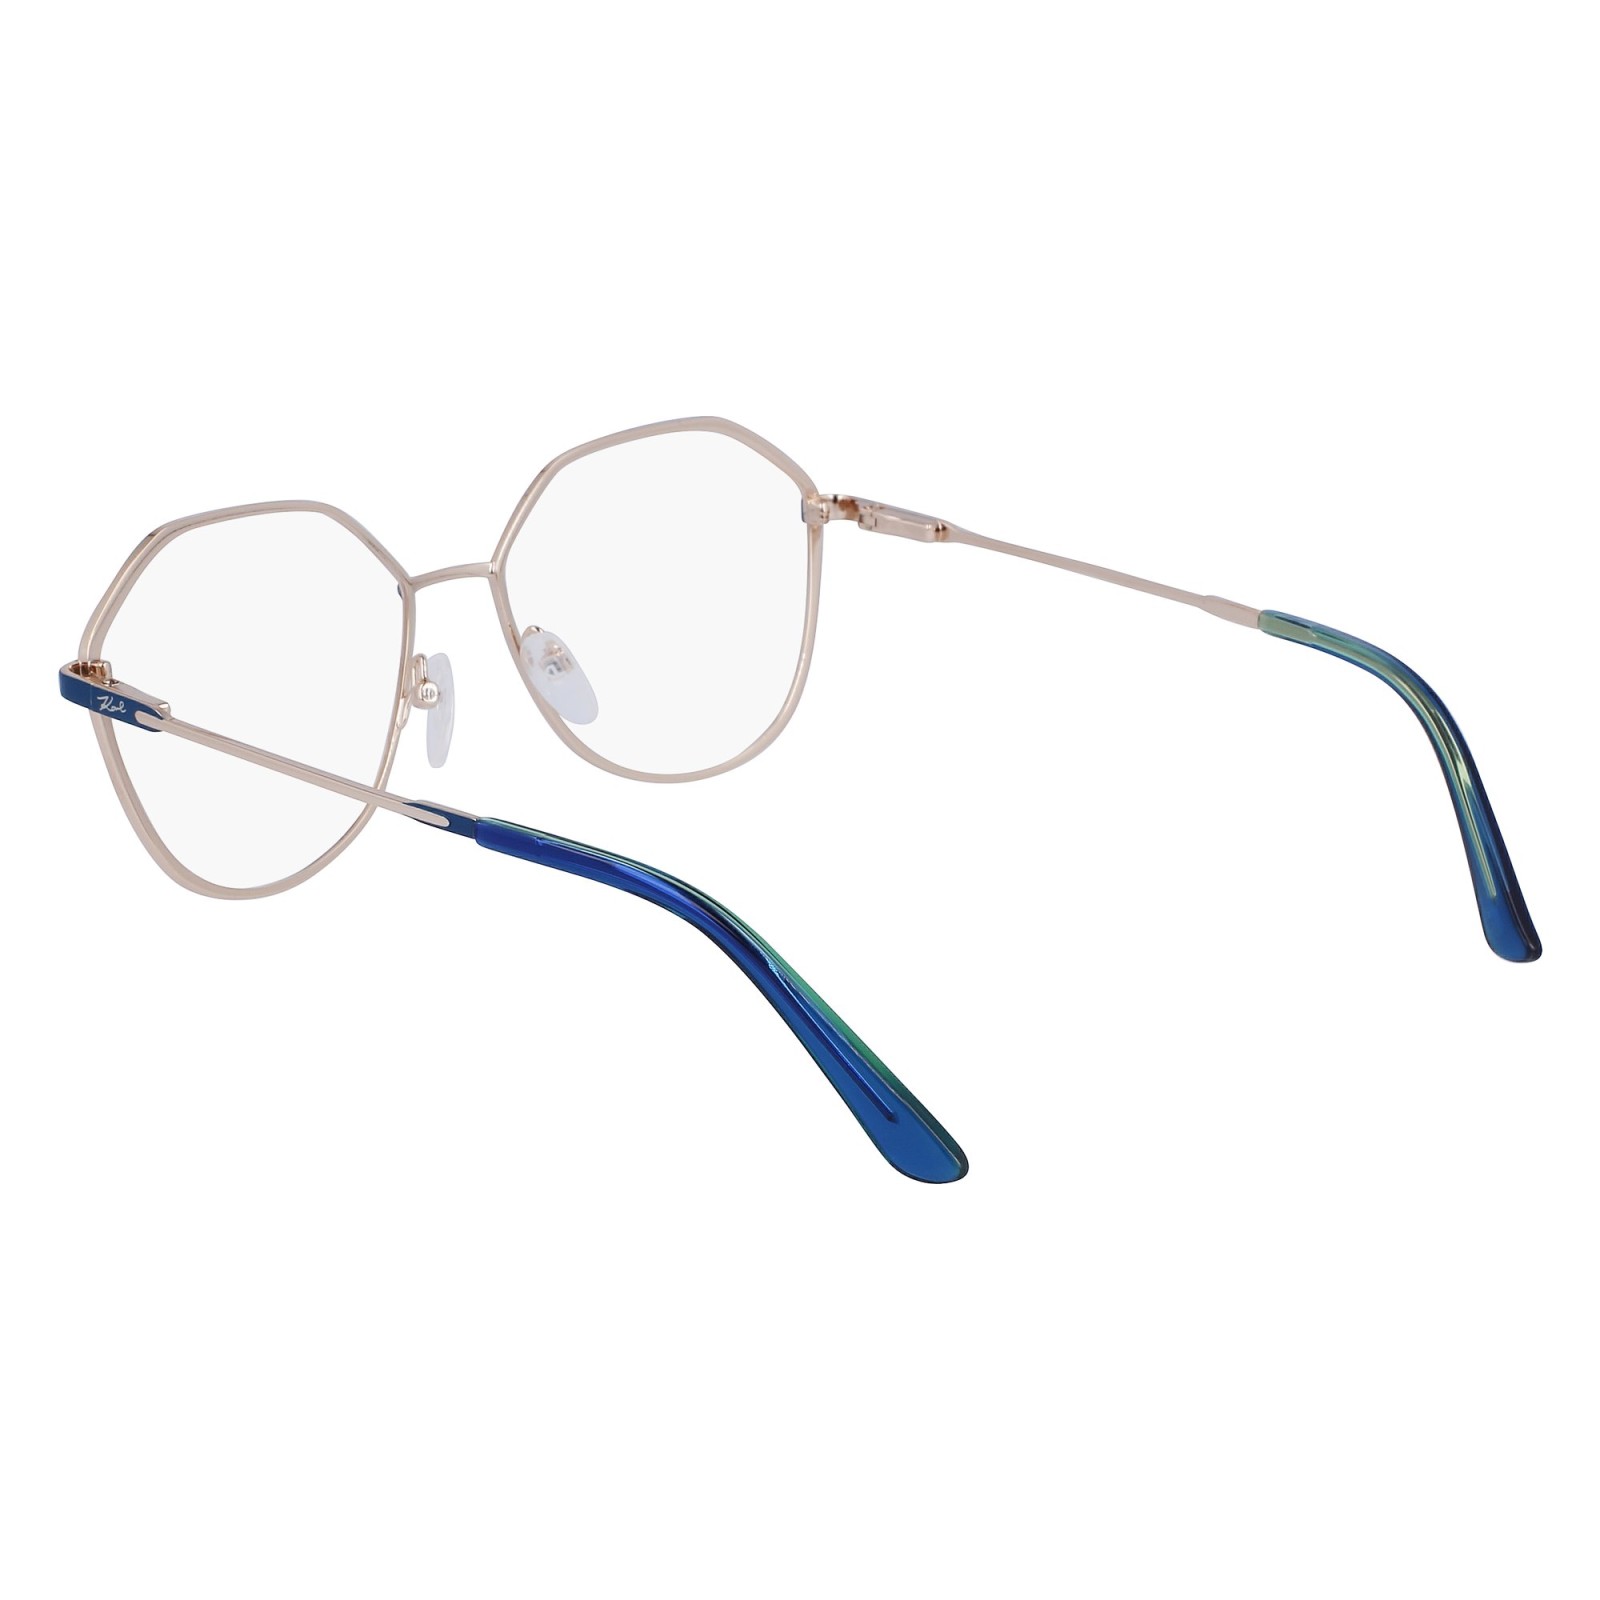 Karl Lagerfeld KL 346 - 400 Blue | Eyeglasses Woman